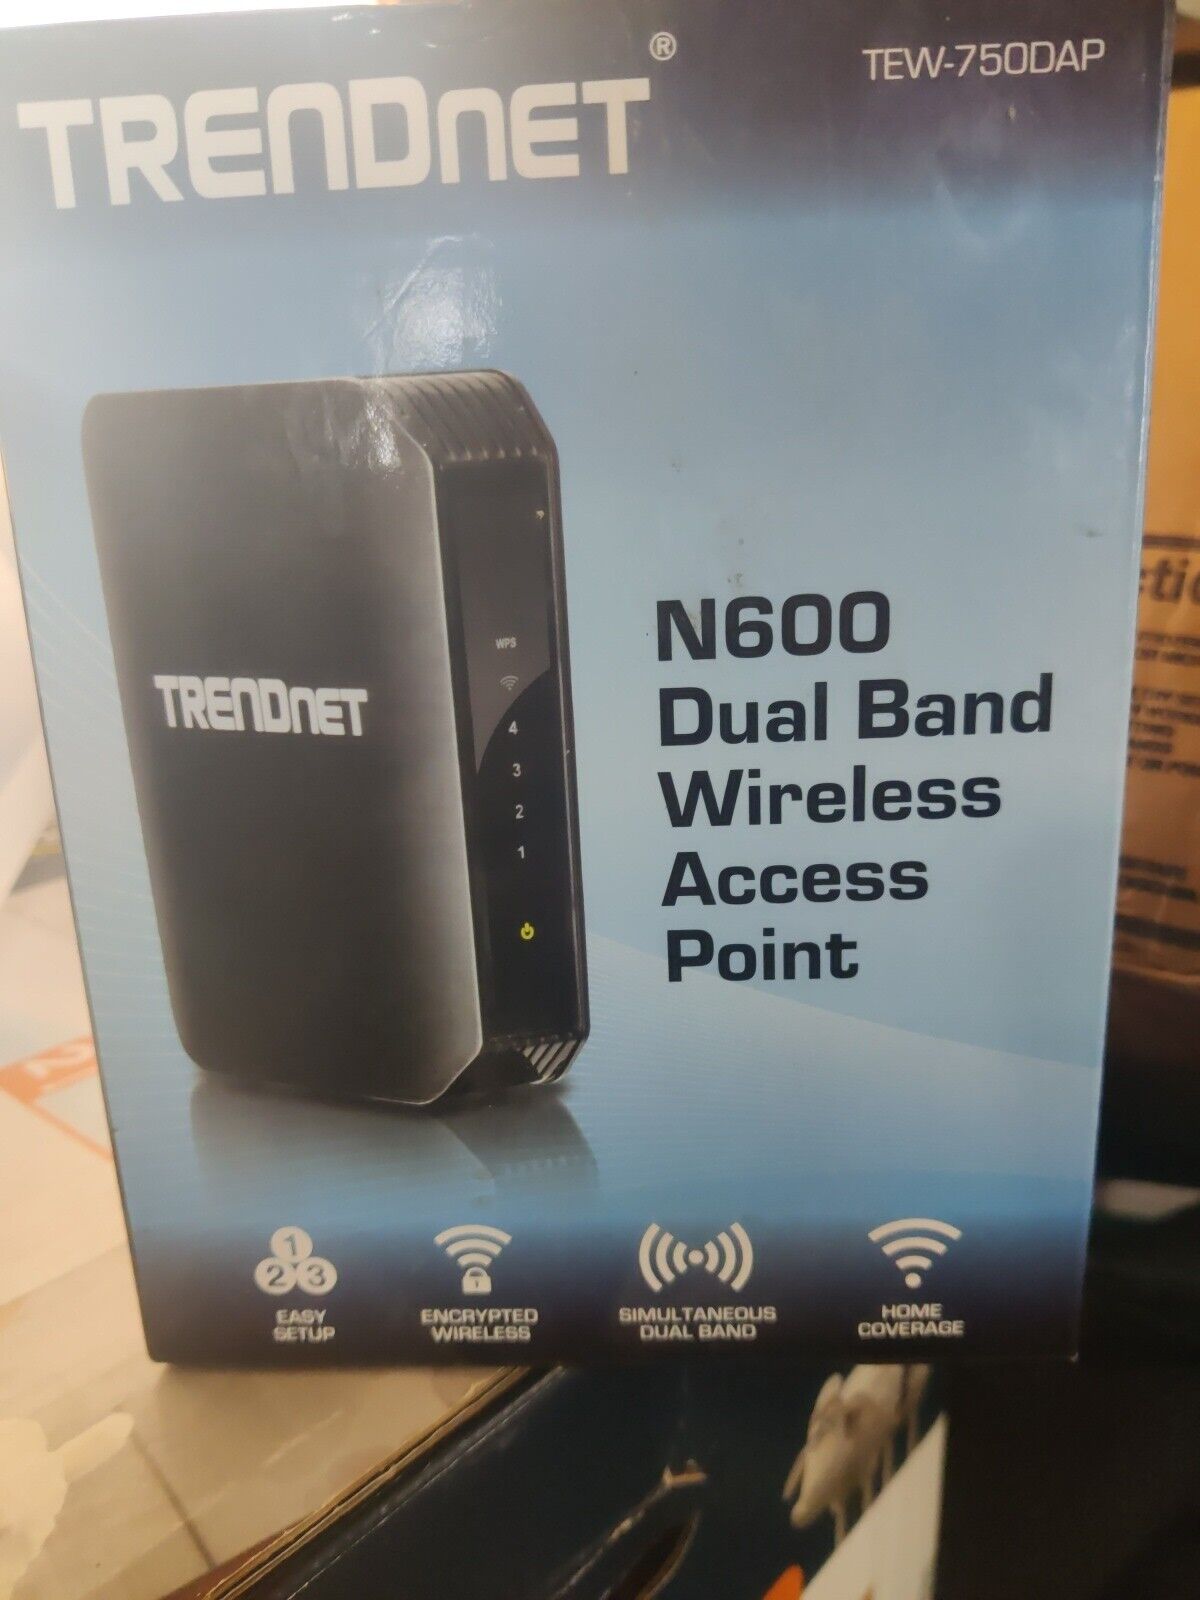 Trendnet N600 Dual Band Wireless Access Point - TEW-750DAP